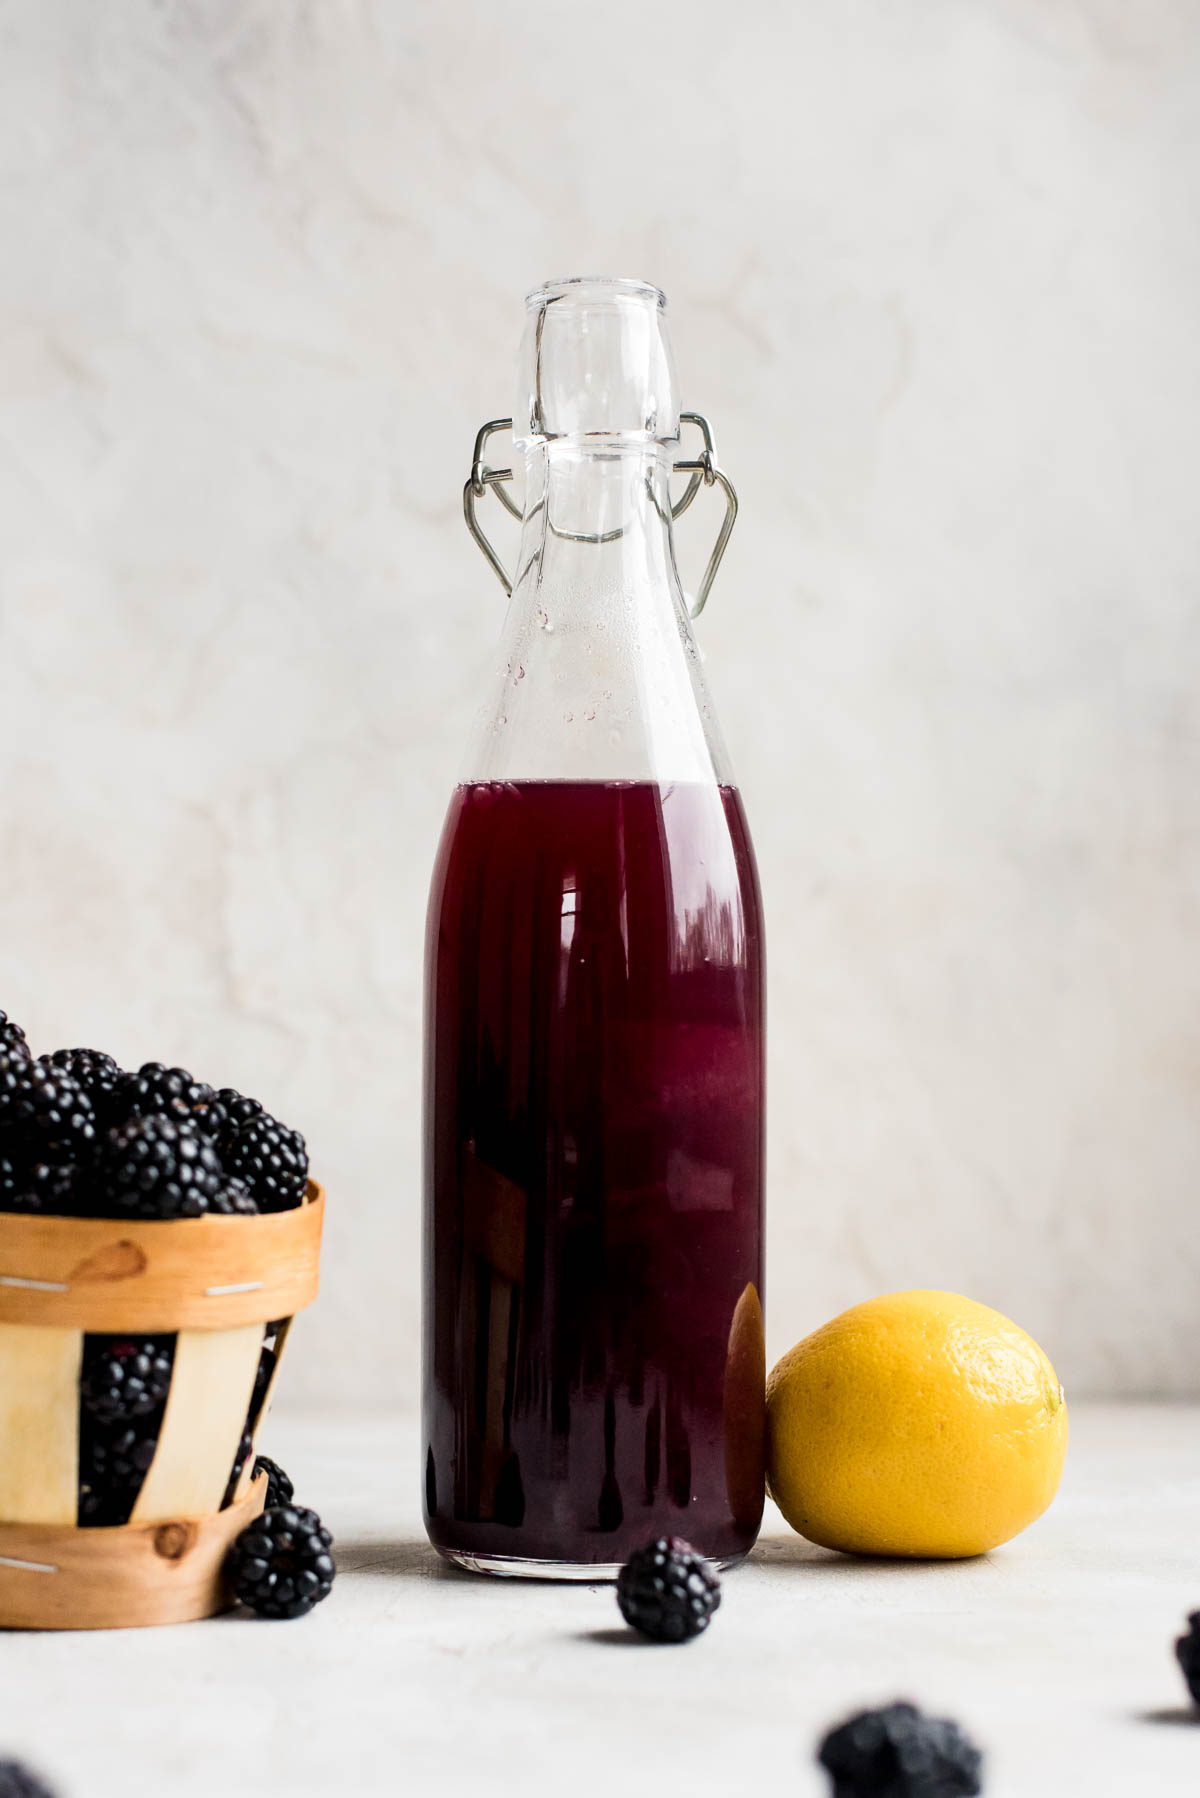 blackberry syrup in bottle next to blackberries and lemon